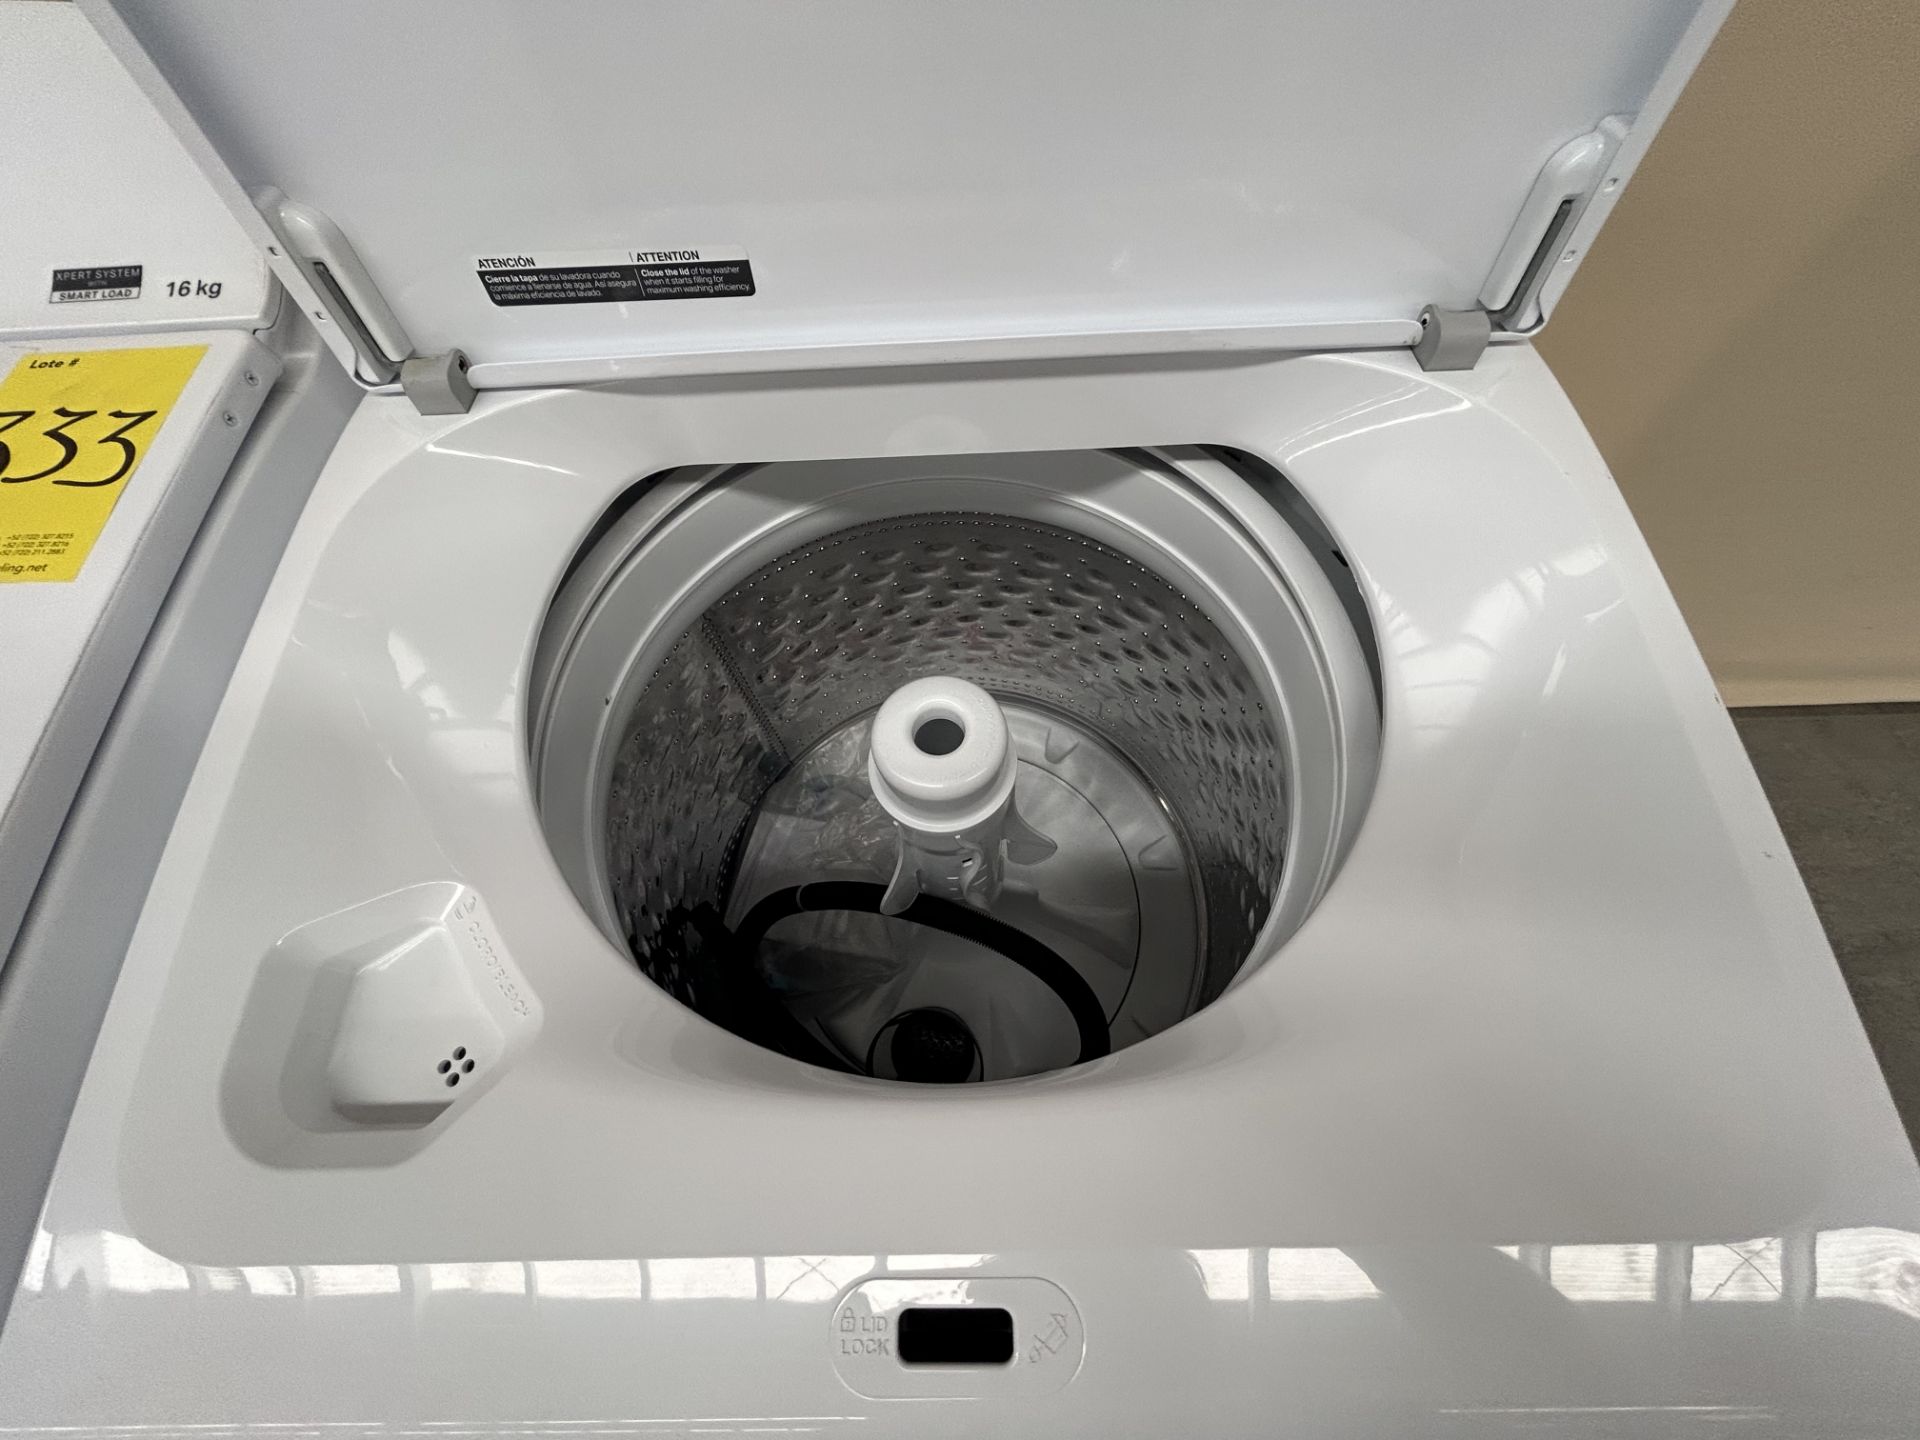 Lote de 2 lavadoras contiene: 1 Lavadora de 16 KG Marca WHIRPOOL, Modelo 8MWTW1612MJQ1, Serie 79464 - Image 4 of 6